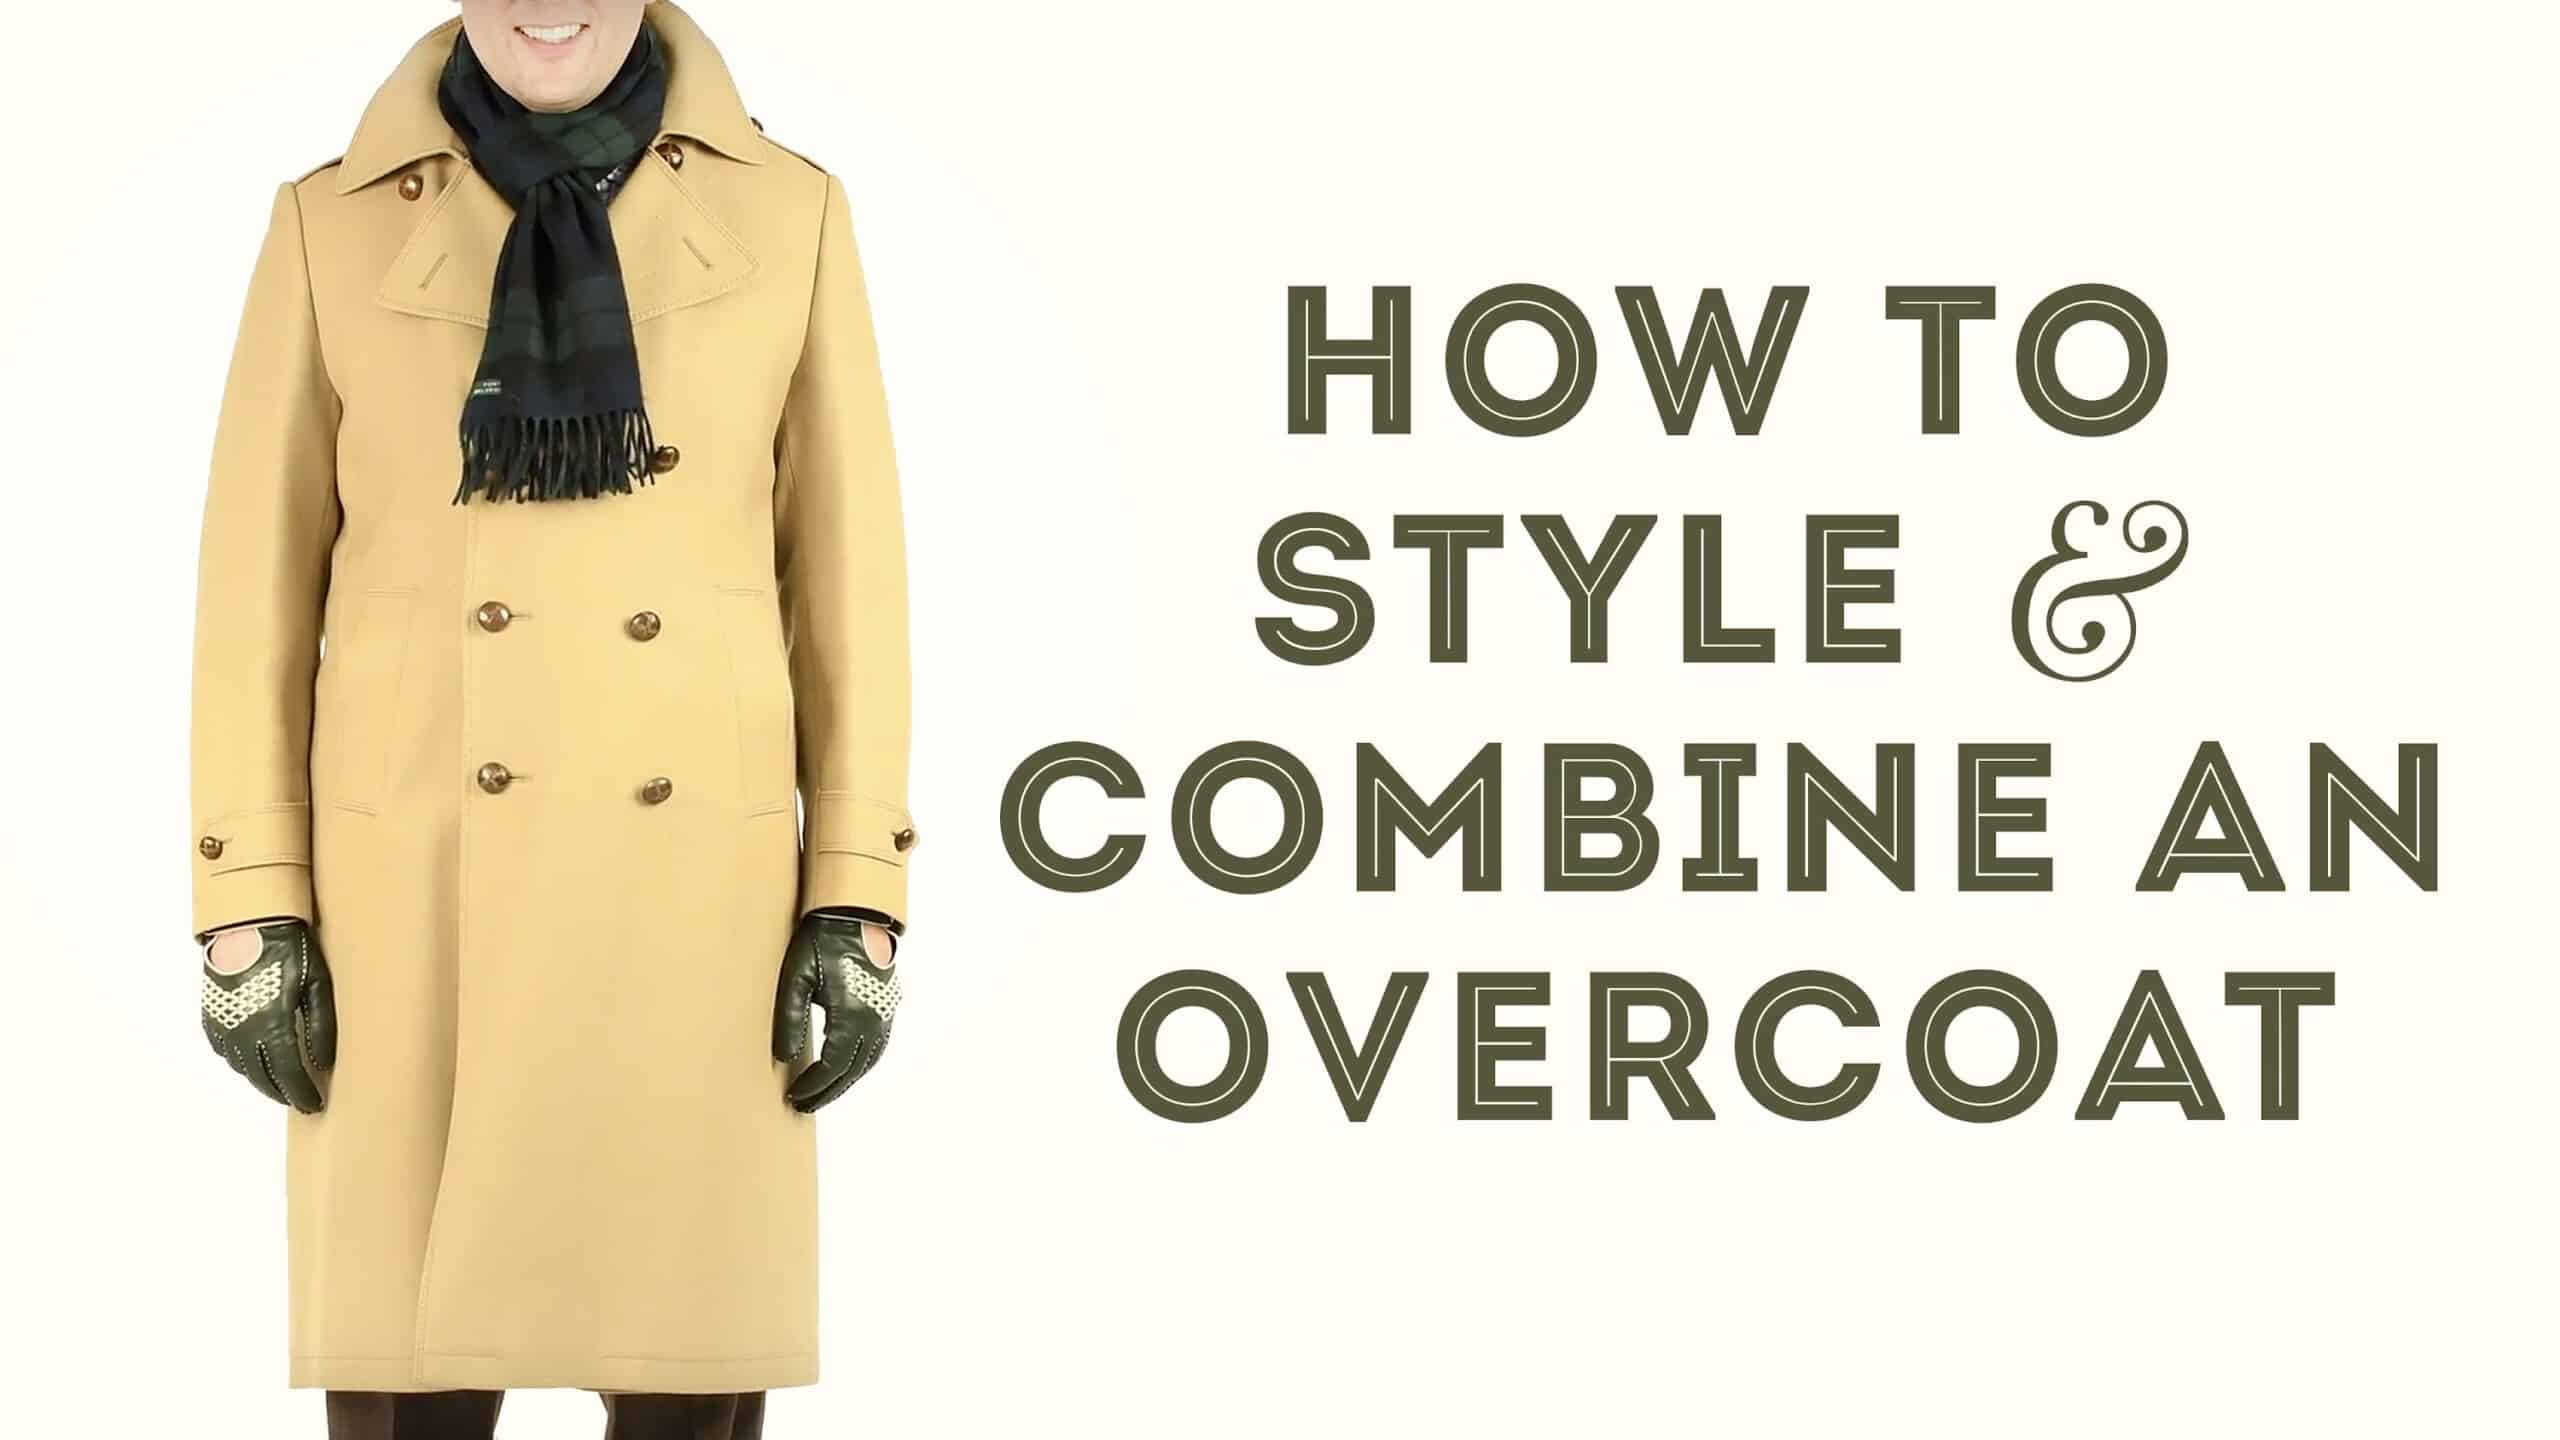 How To Style Overcoat